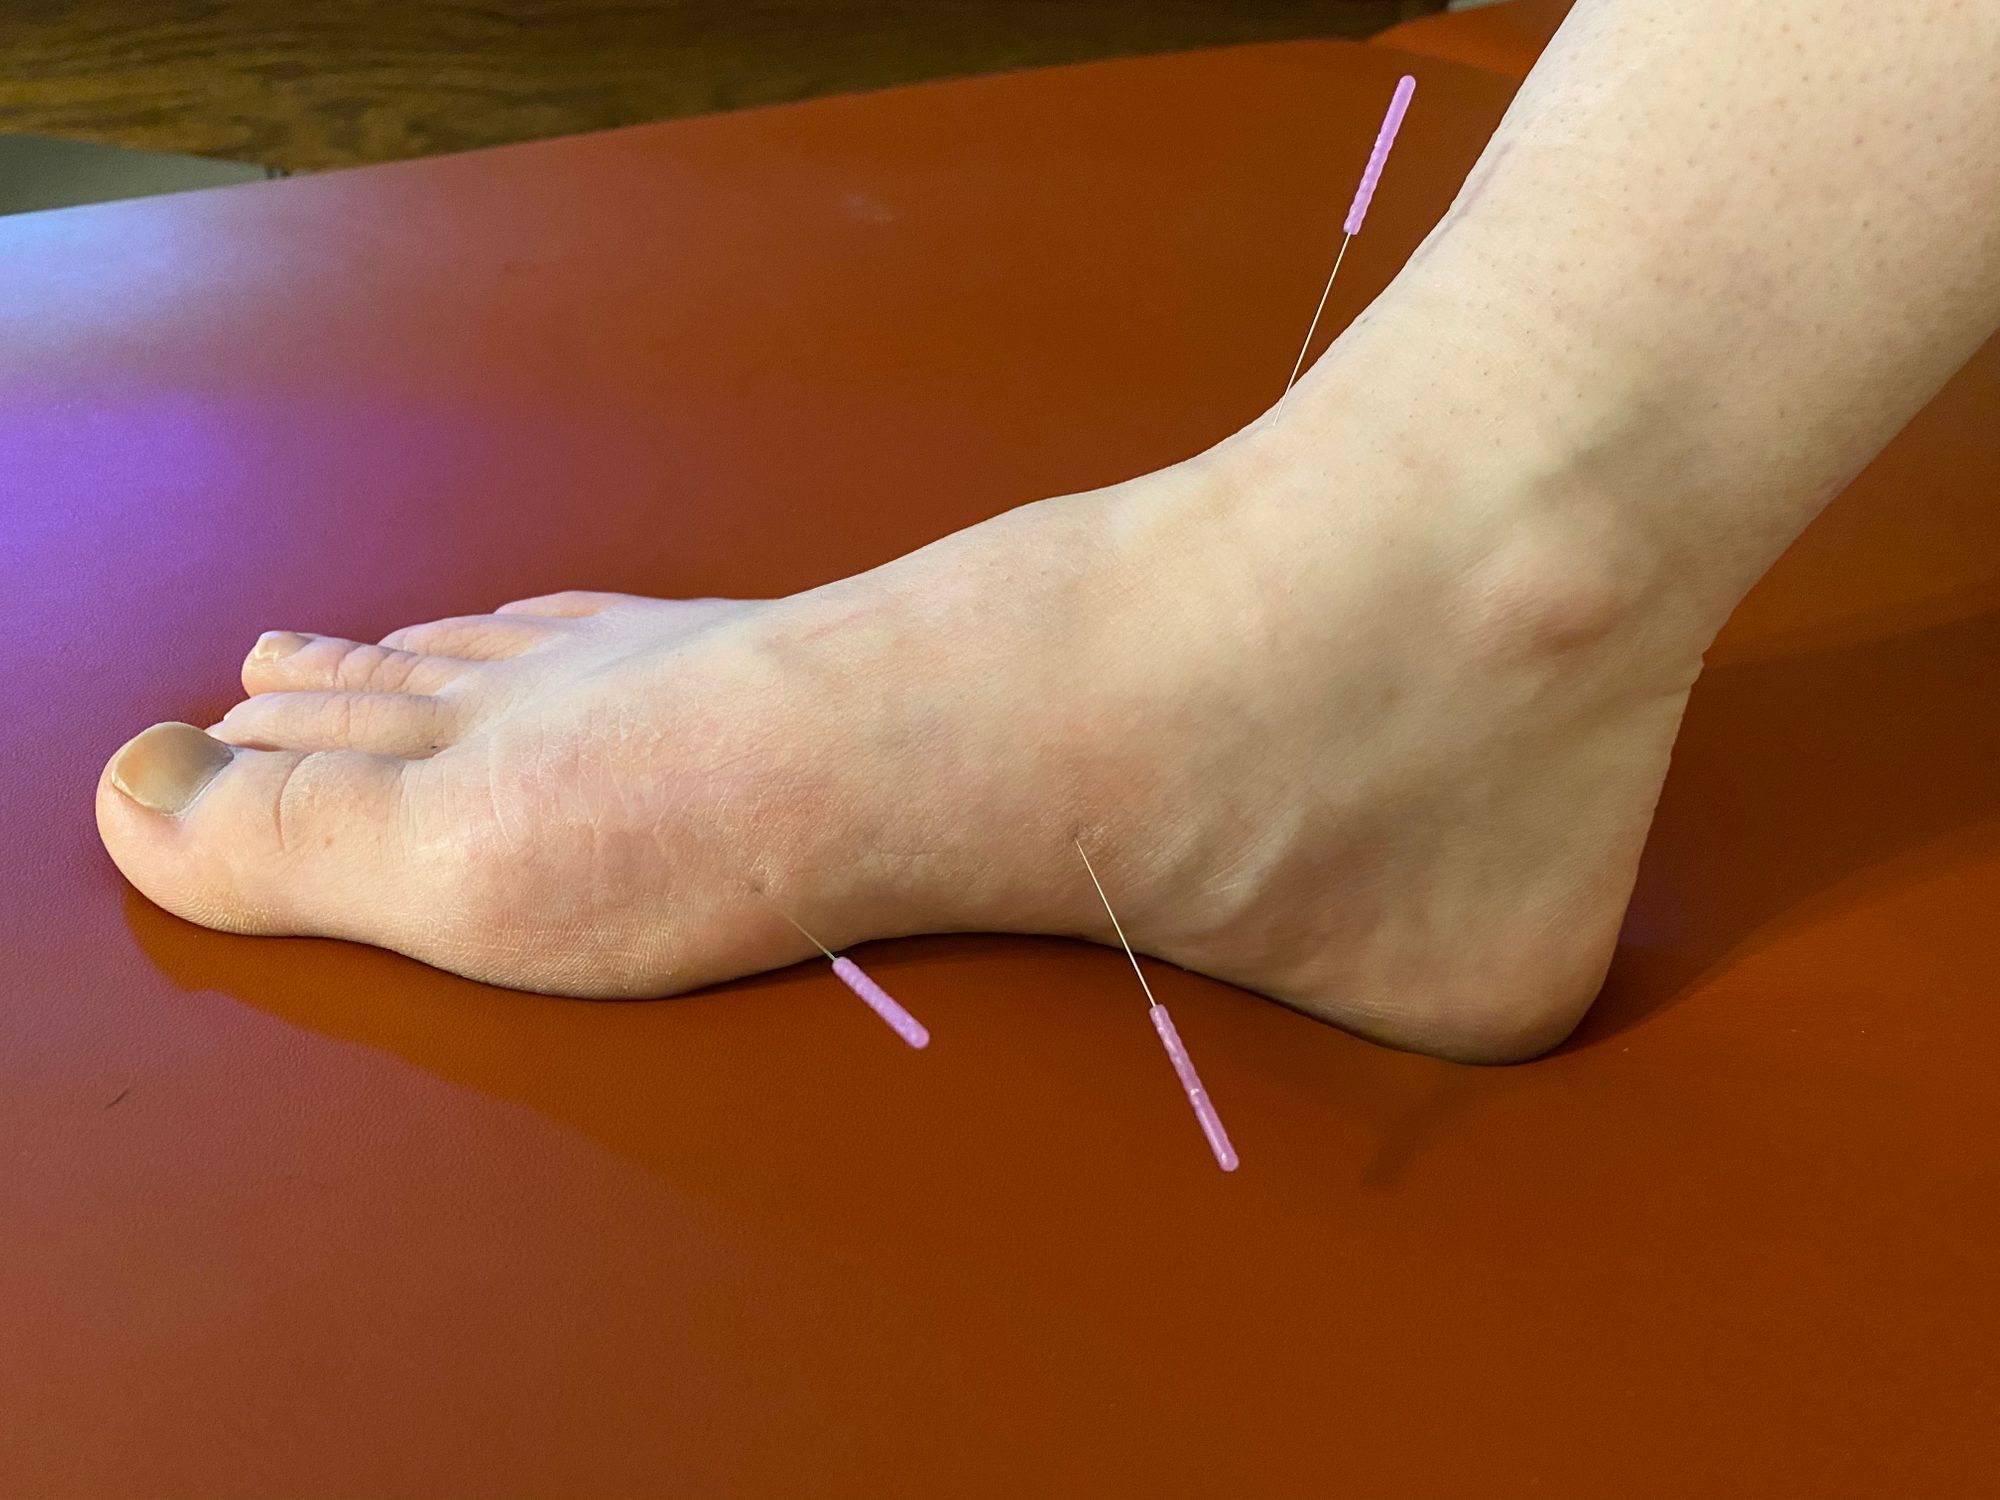 Acupuncture Knee Arthritis Pain Relief Confirmed